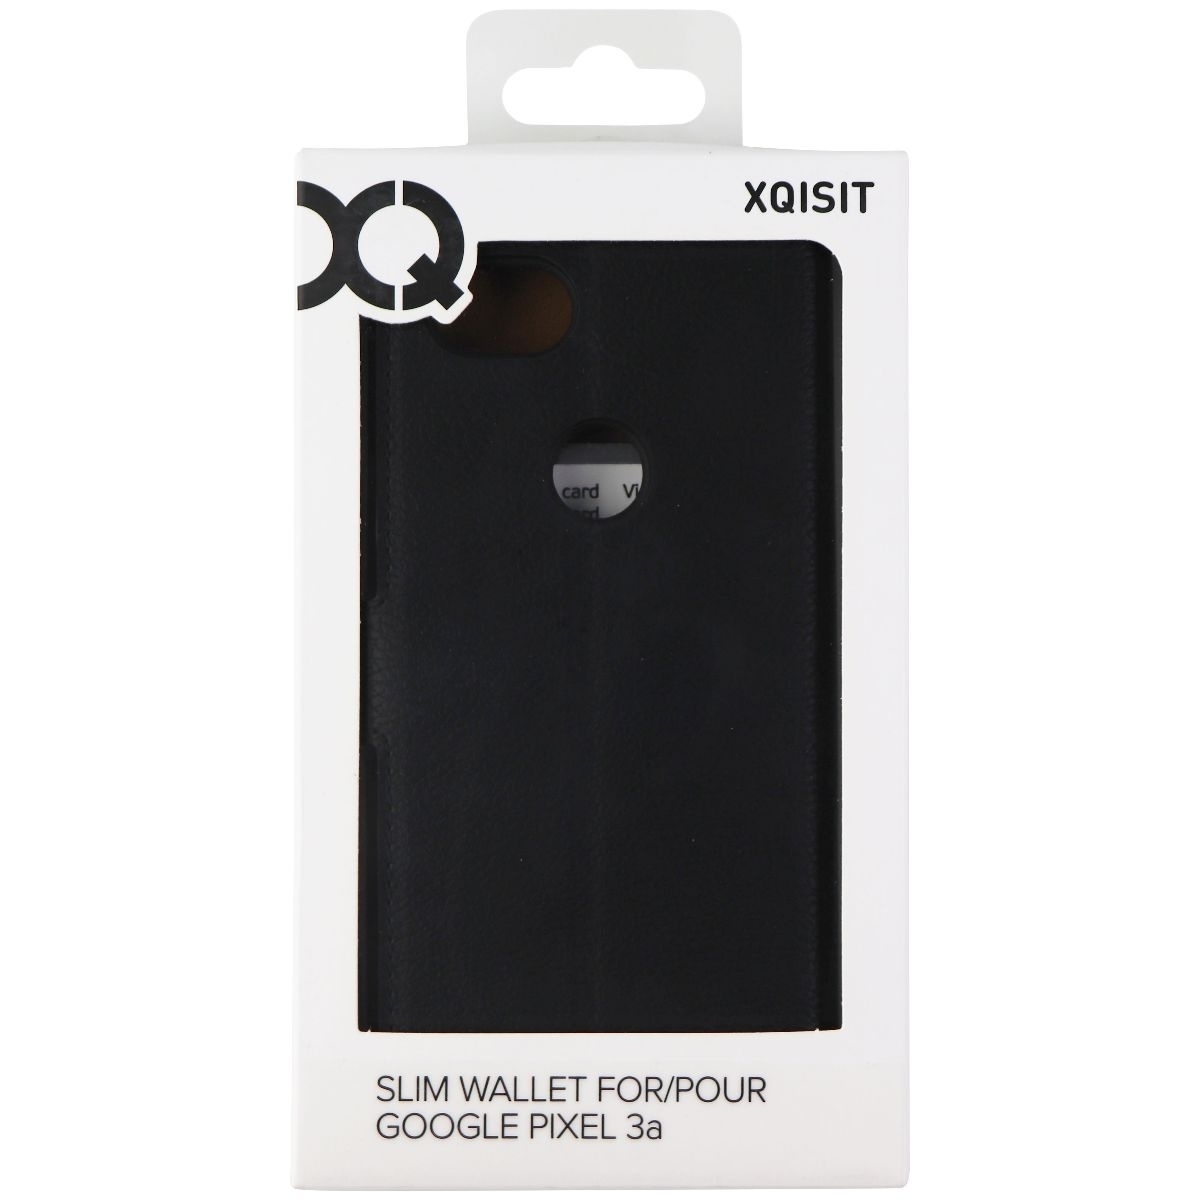 Xqisit Slim Wallet Series Case For Google Pixel 3a Smartphones - Black